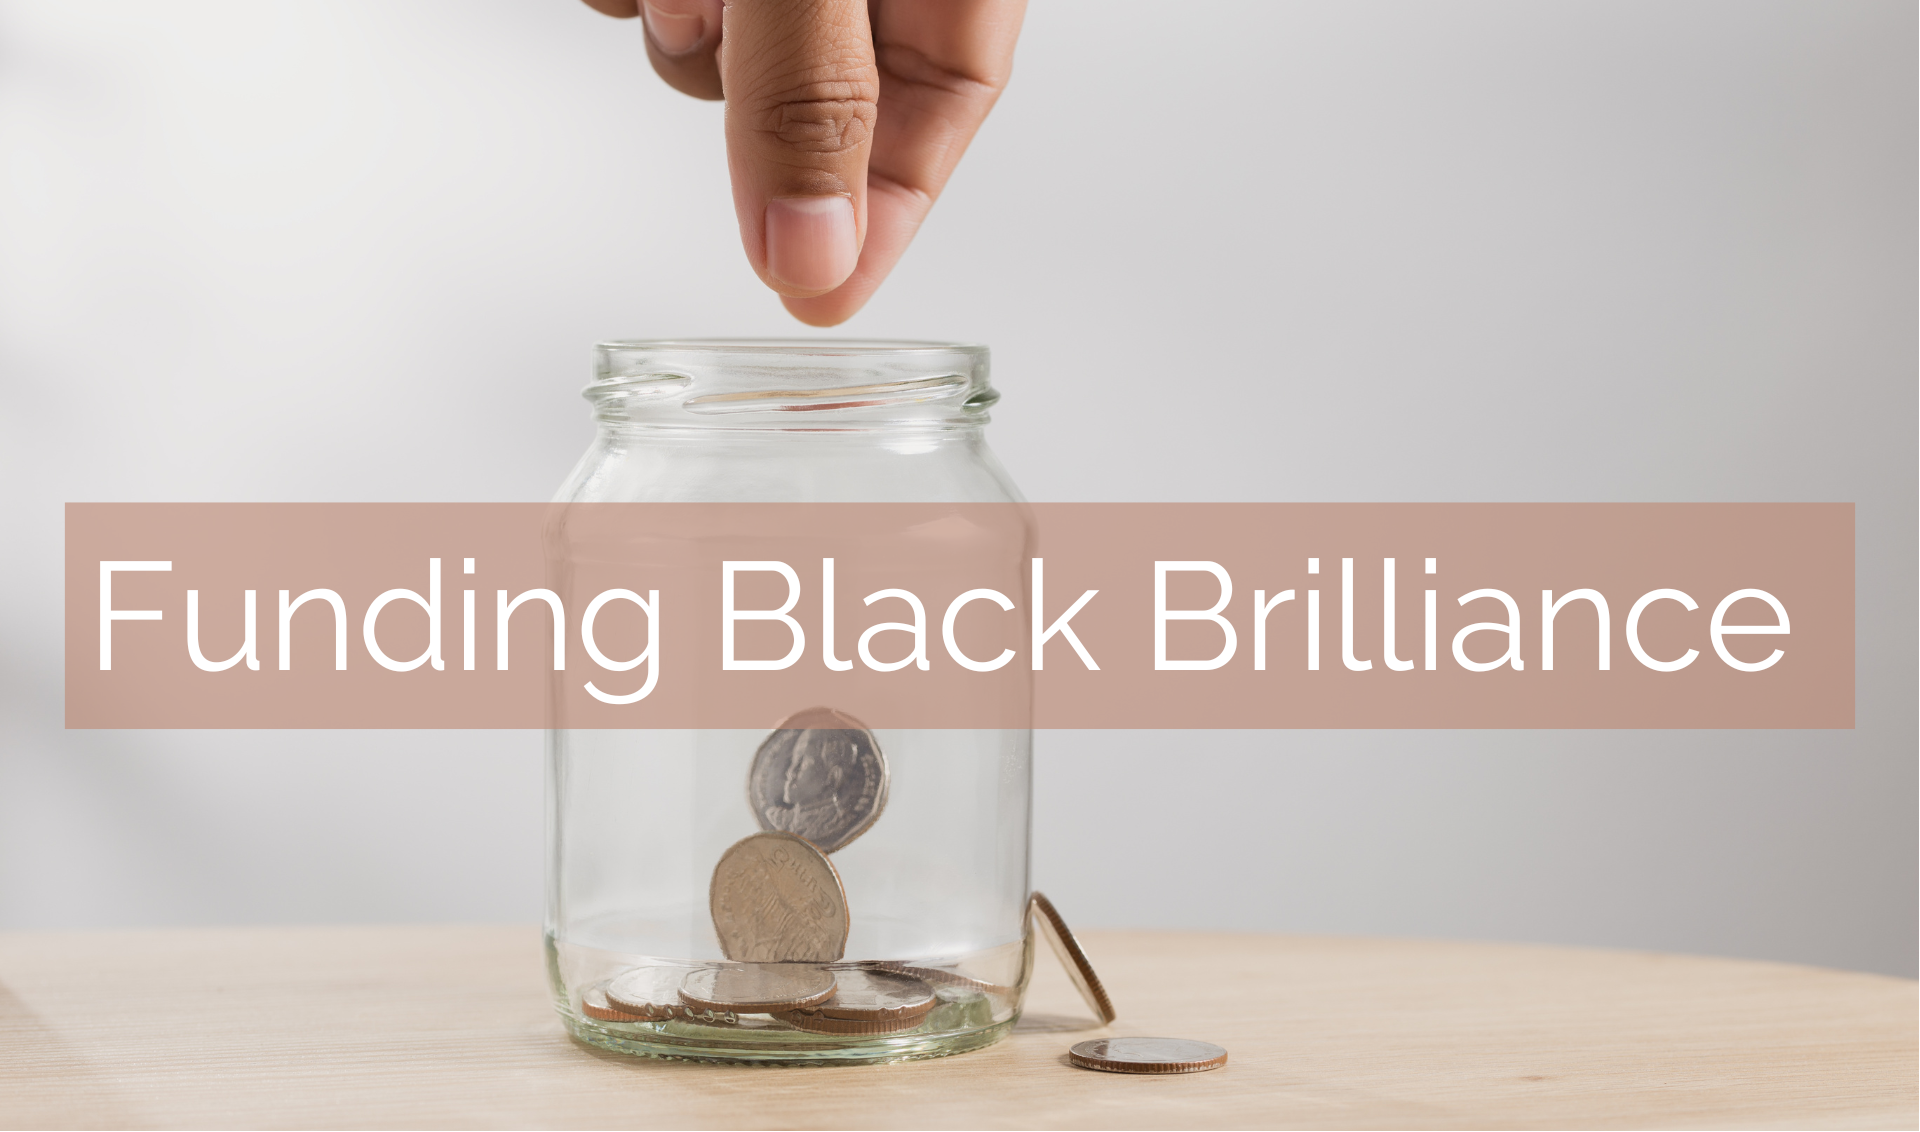 Funding Black Brilliance